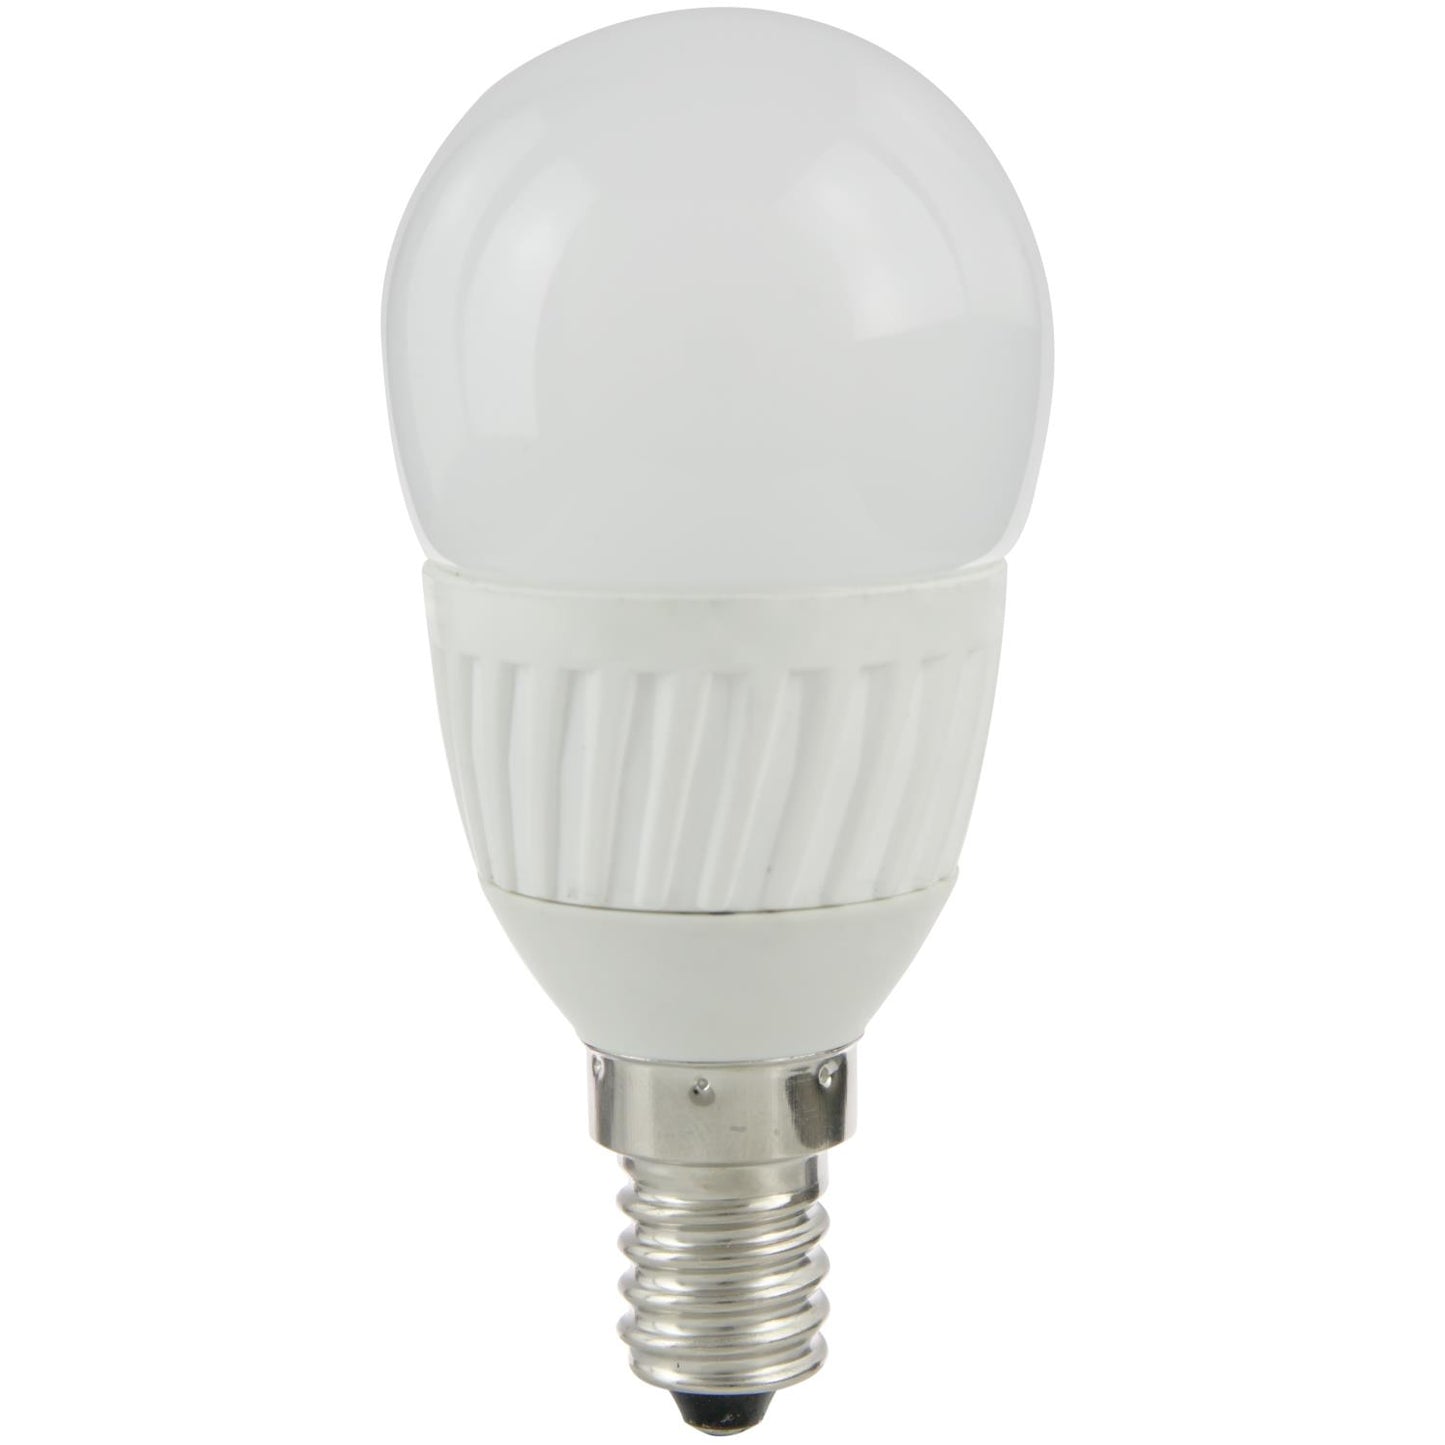 Sunlite LED A15 Appliance 4.5W (25W Equivalent) Light Bulb European (E14) Base, Warm White